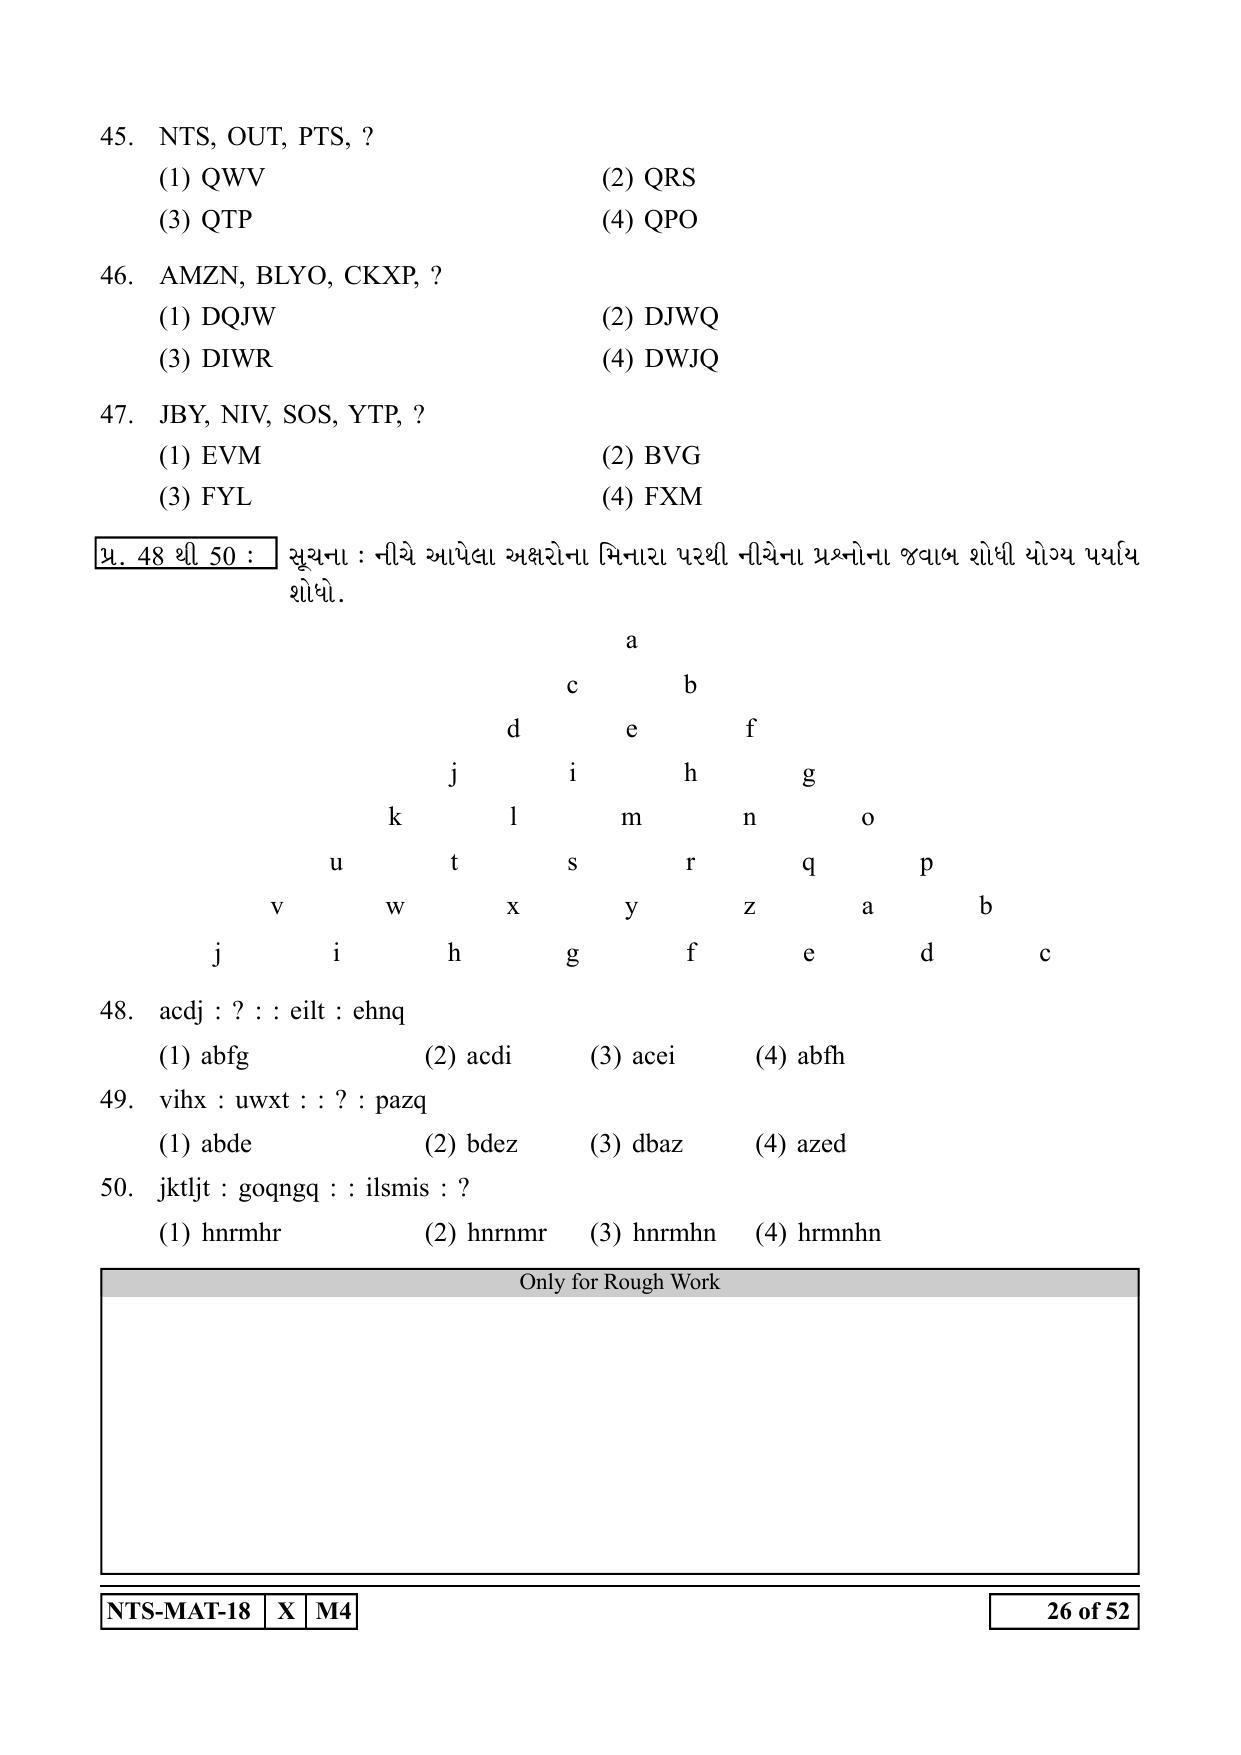 Maharashtra NTSE 2019 MAT (Gujrati) Question Paper - Page 26